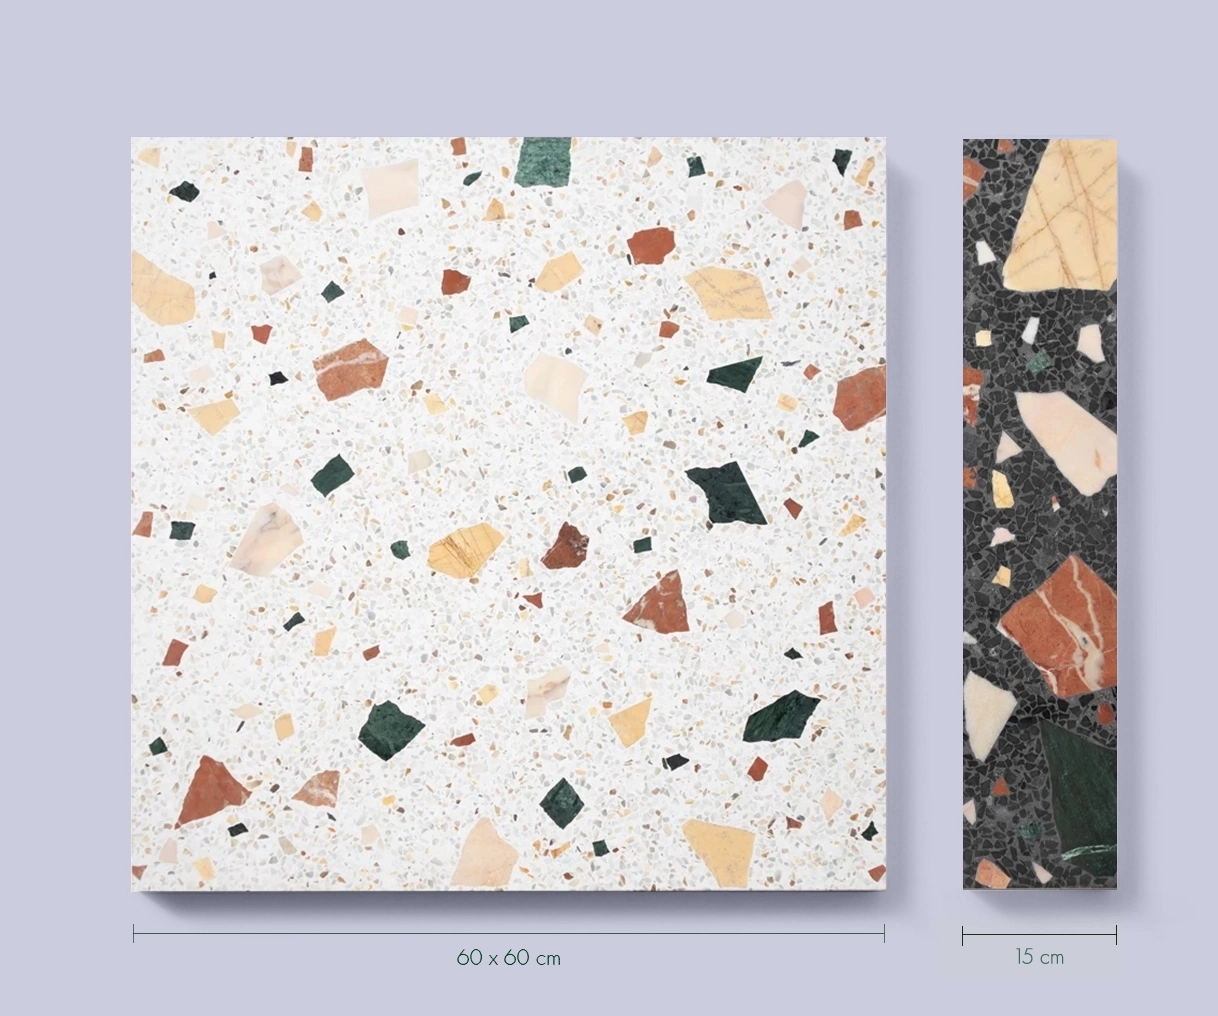 Terrazzo tiles are white, cream, beige, red, green, and black